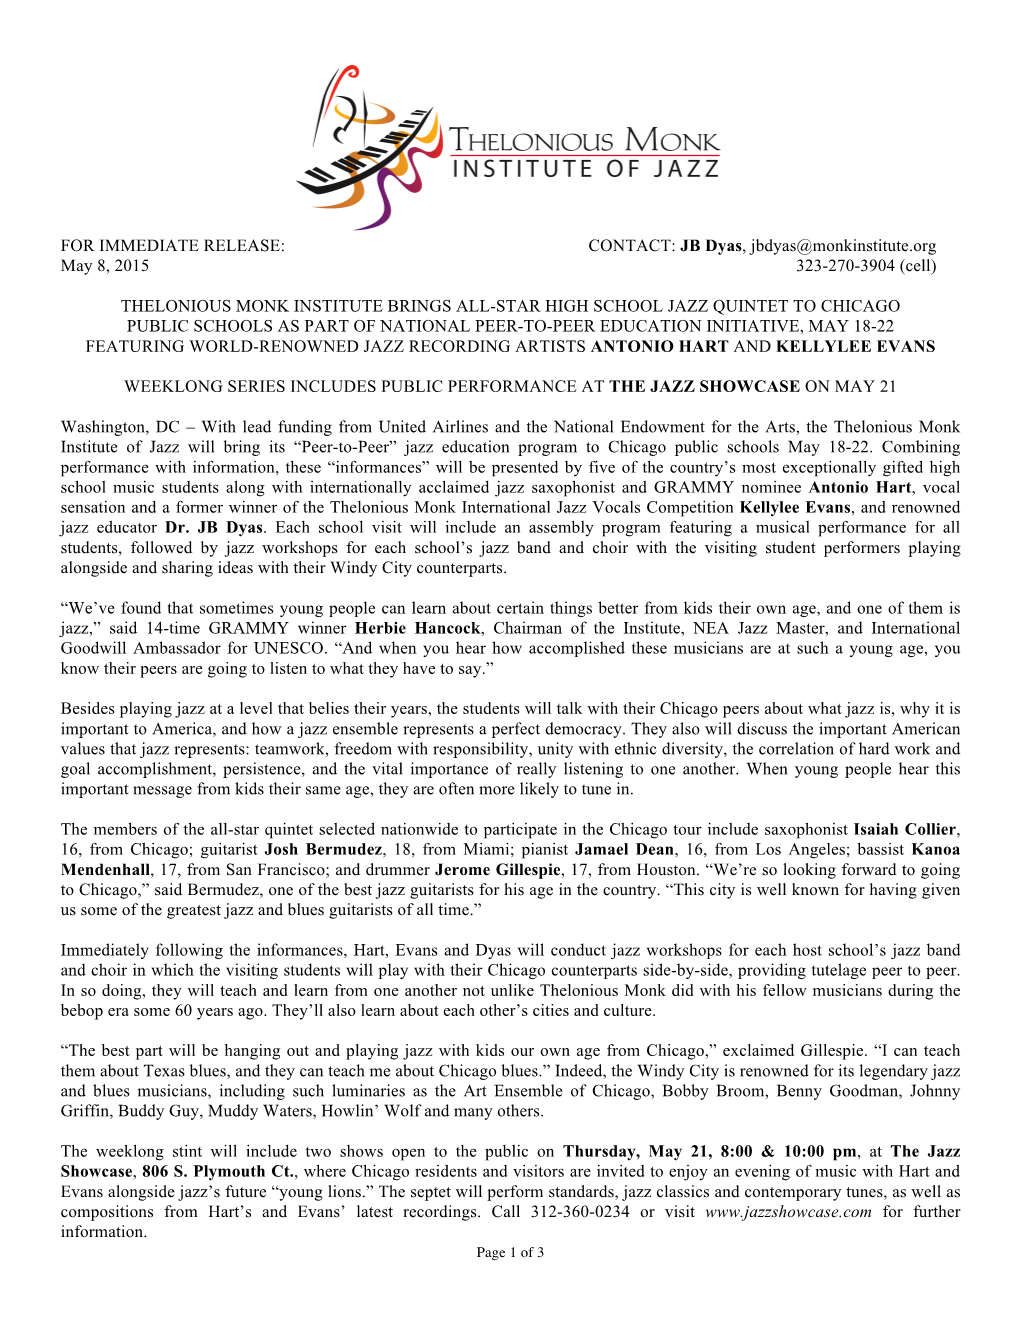 All-Star Peer-To-Peer Jazz Informance Tour Press Release (Chicago